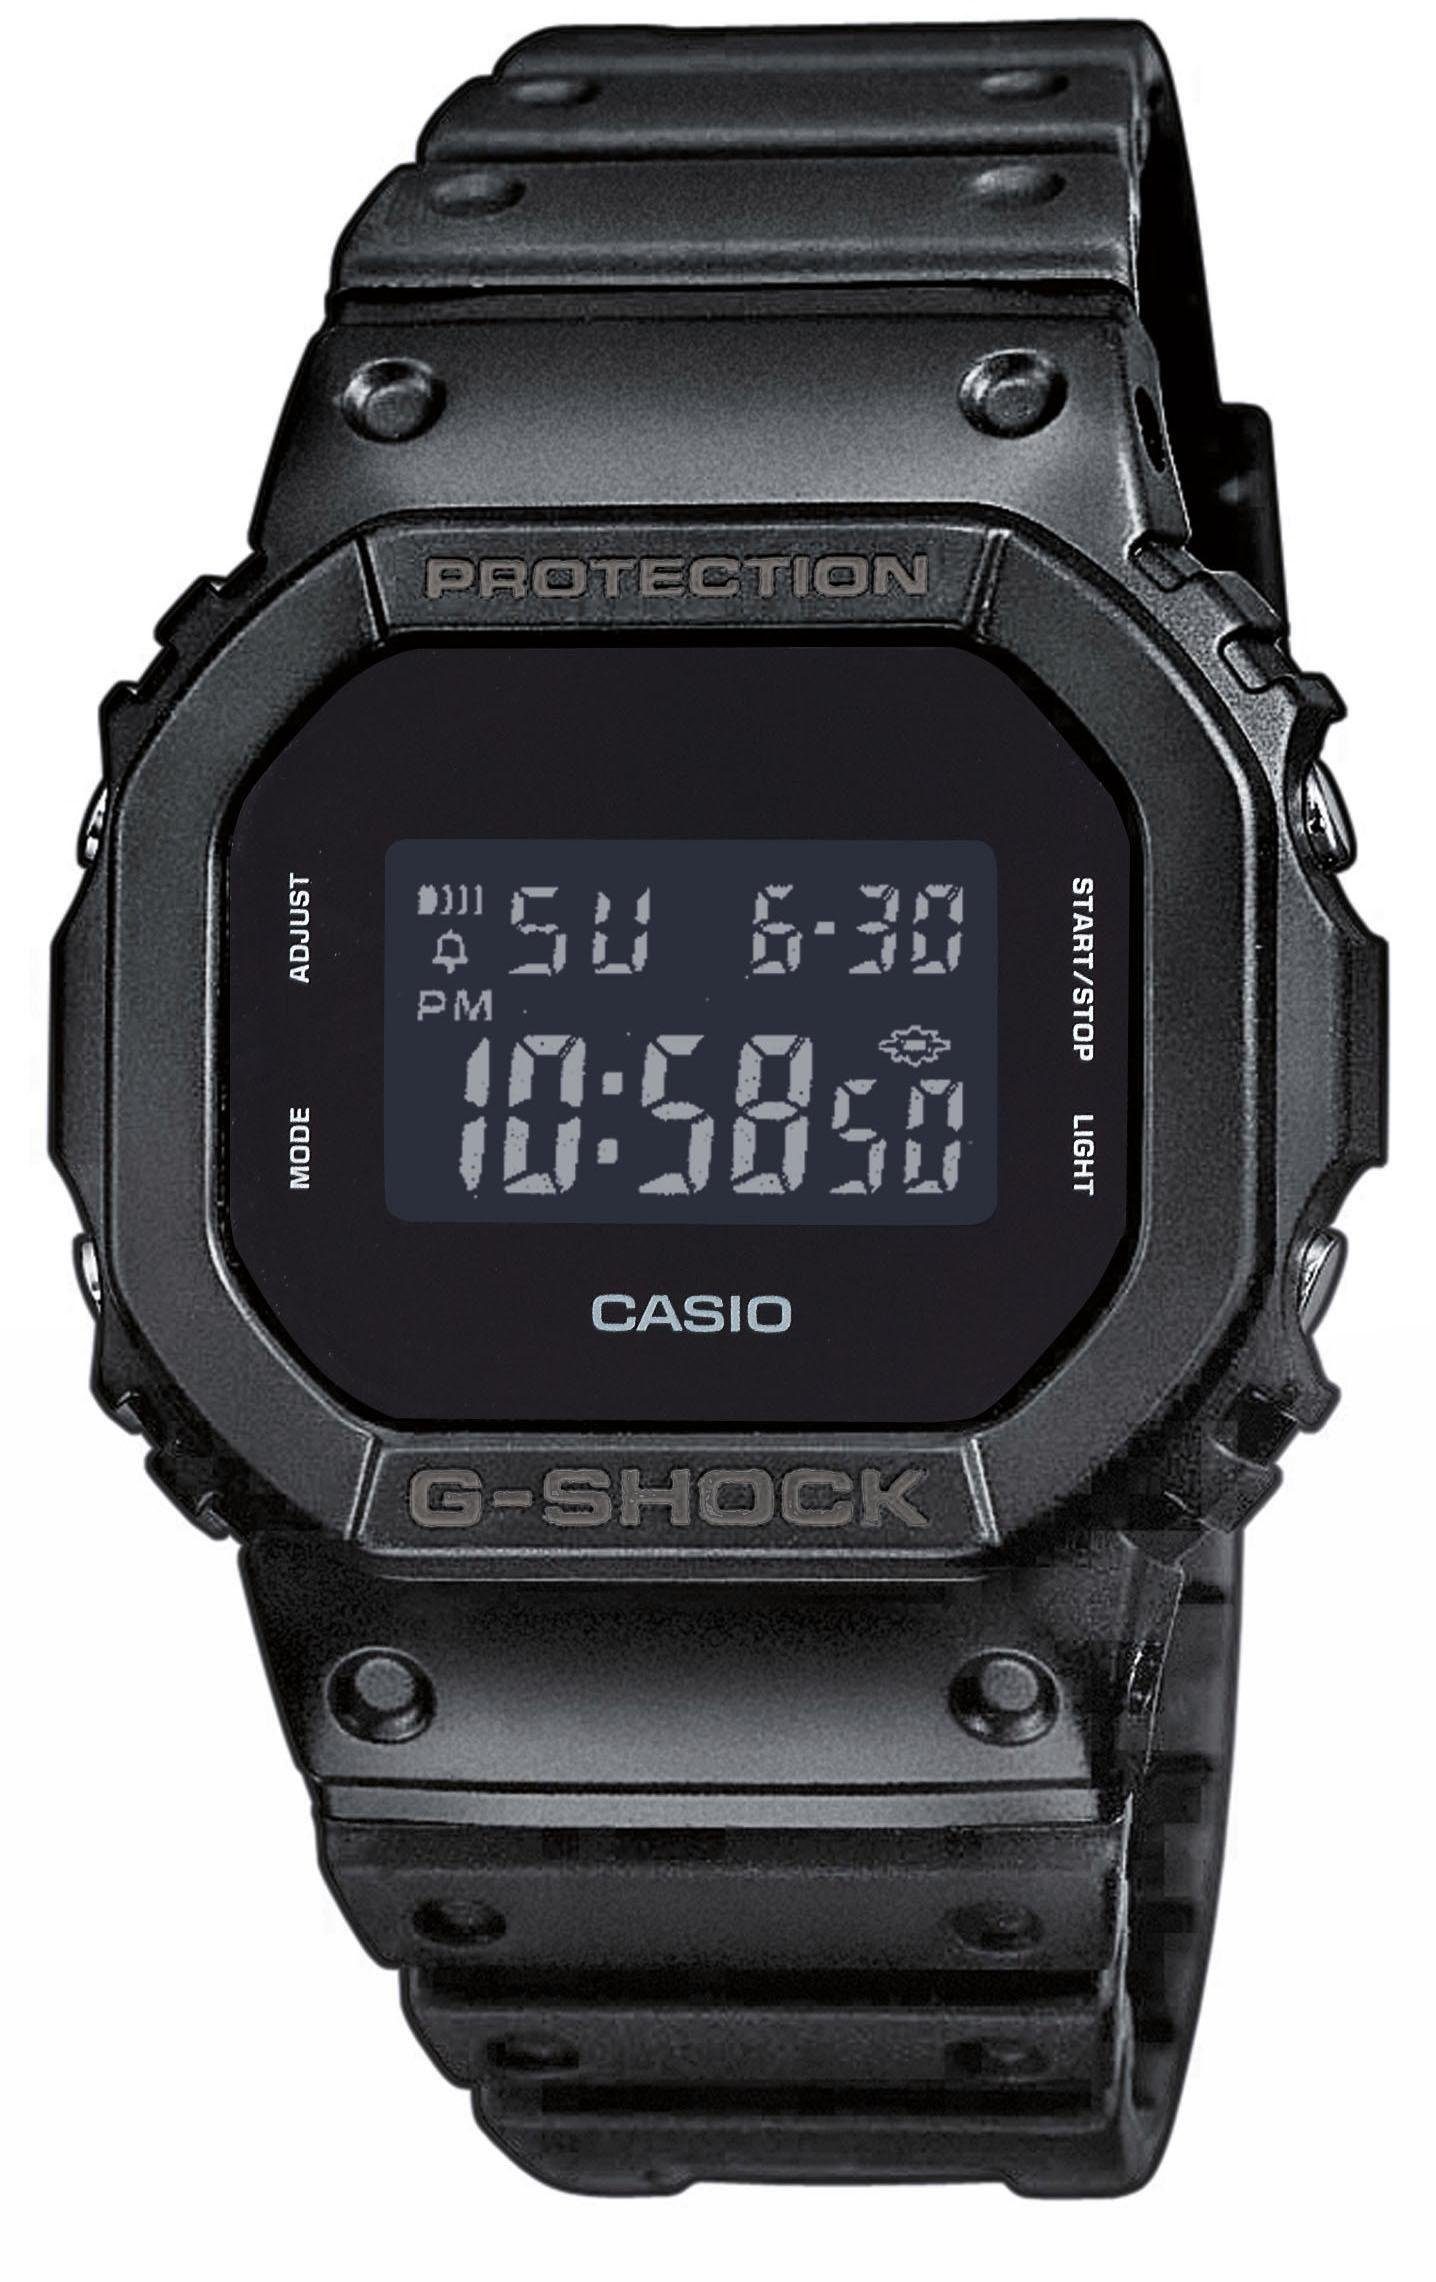 Chronograph G-SHOCK DW-5600BB-1ER CASIO